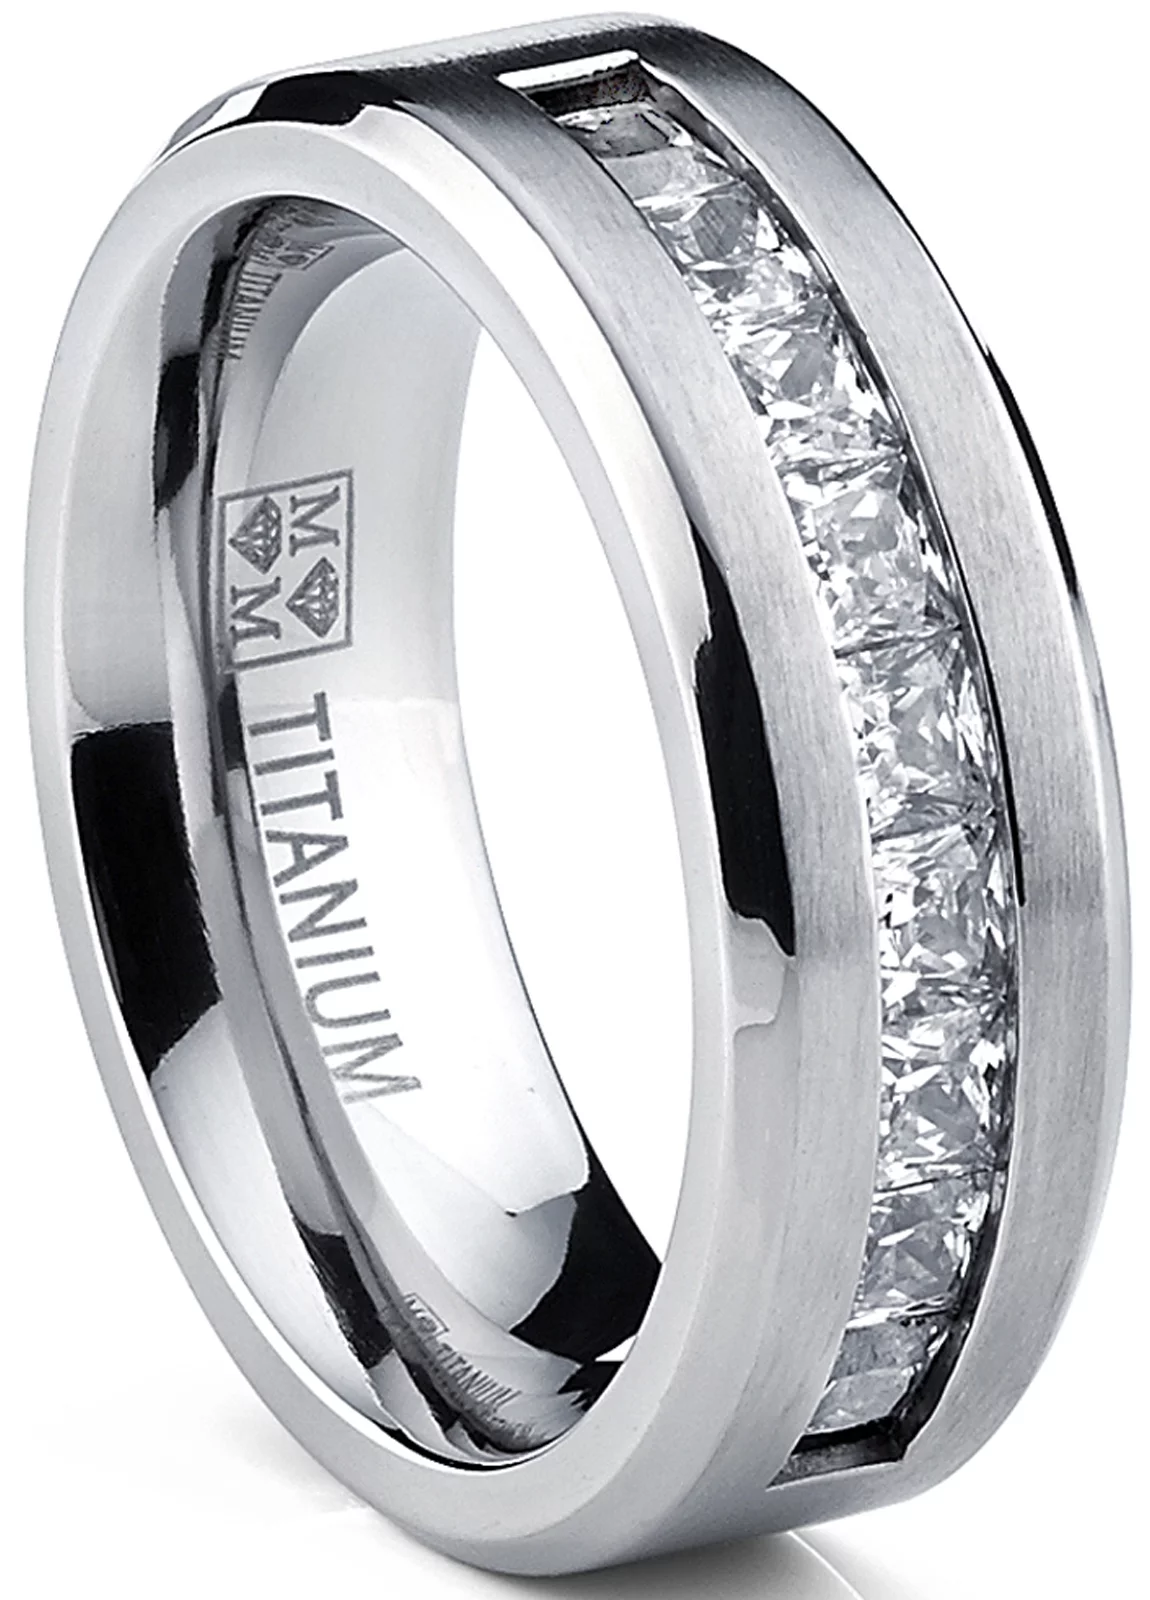 Titanium Men's Wedding Band Engagement Ring with 9 large Princess Cut Cubic Zirconia